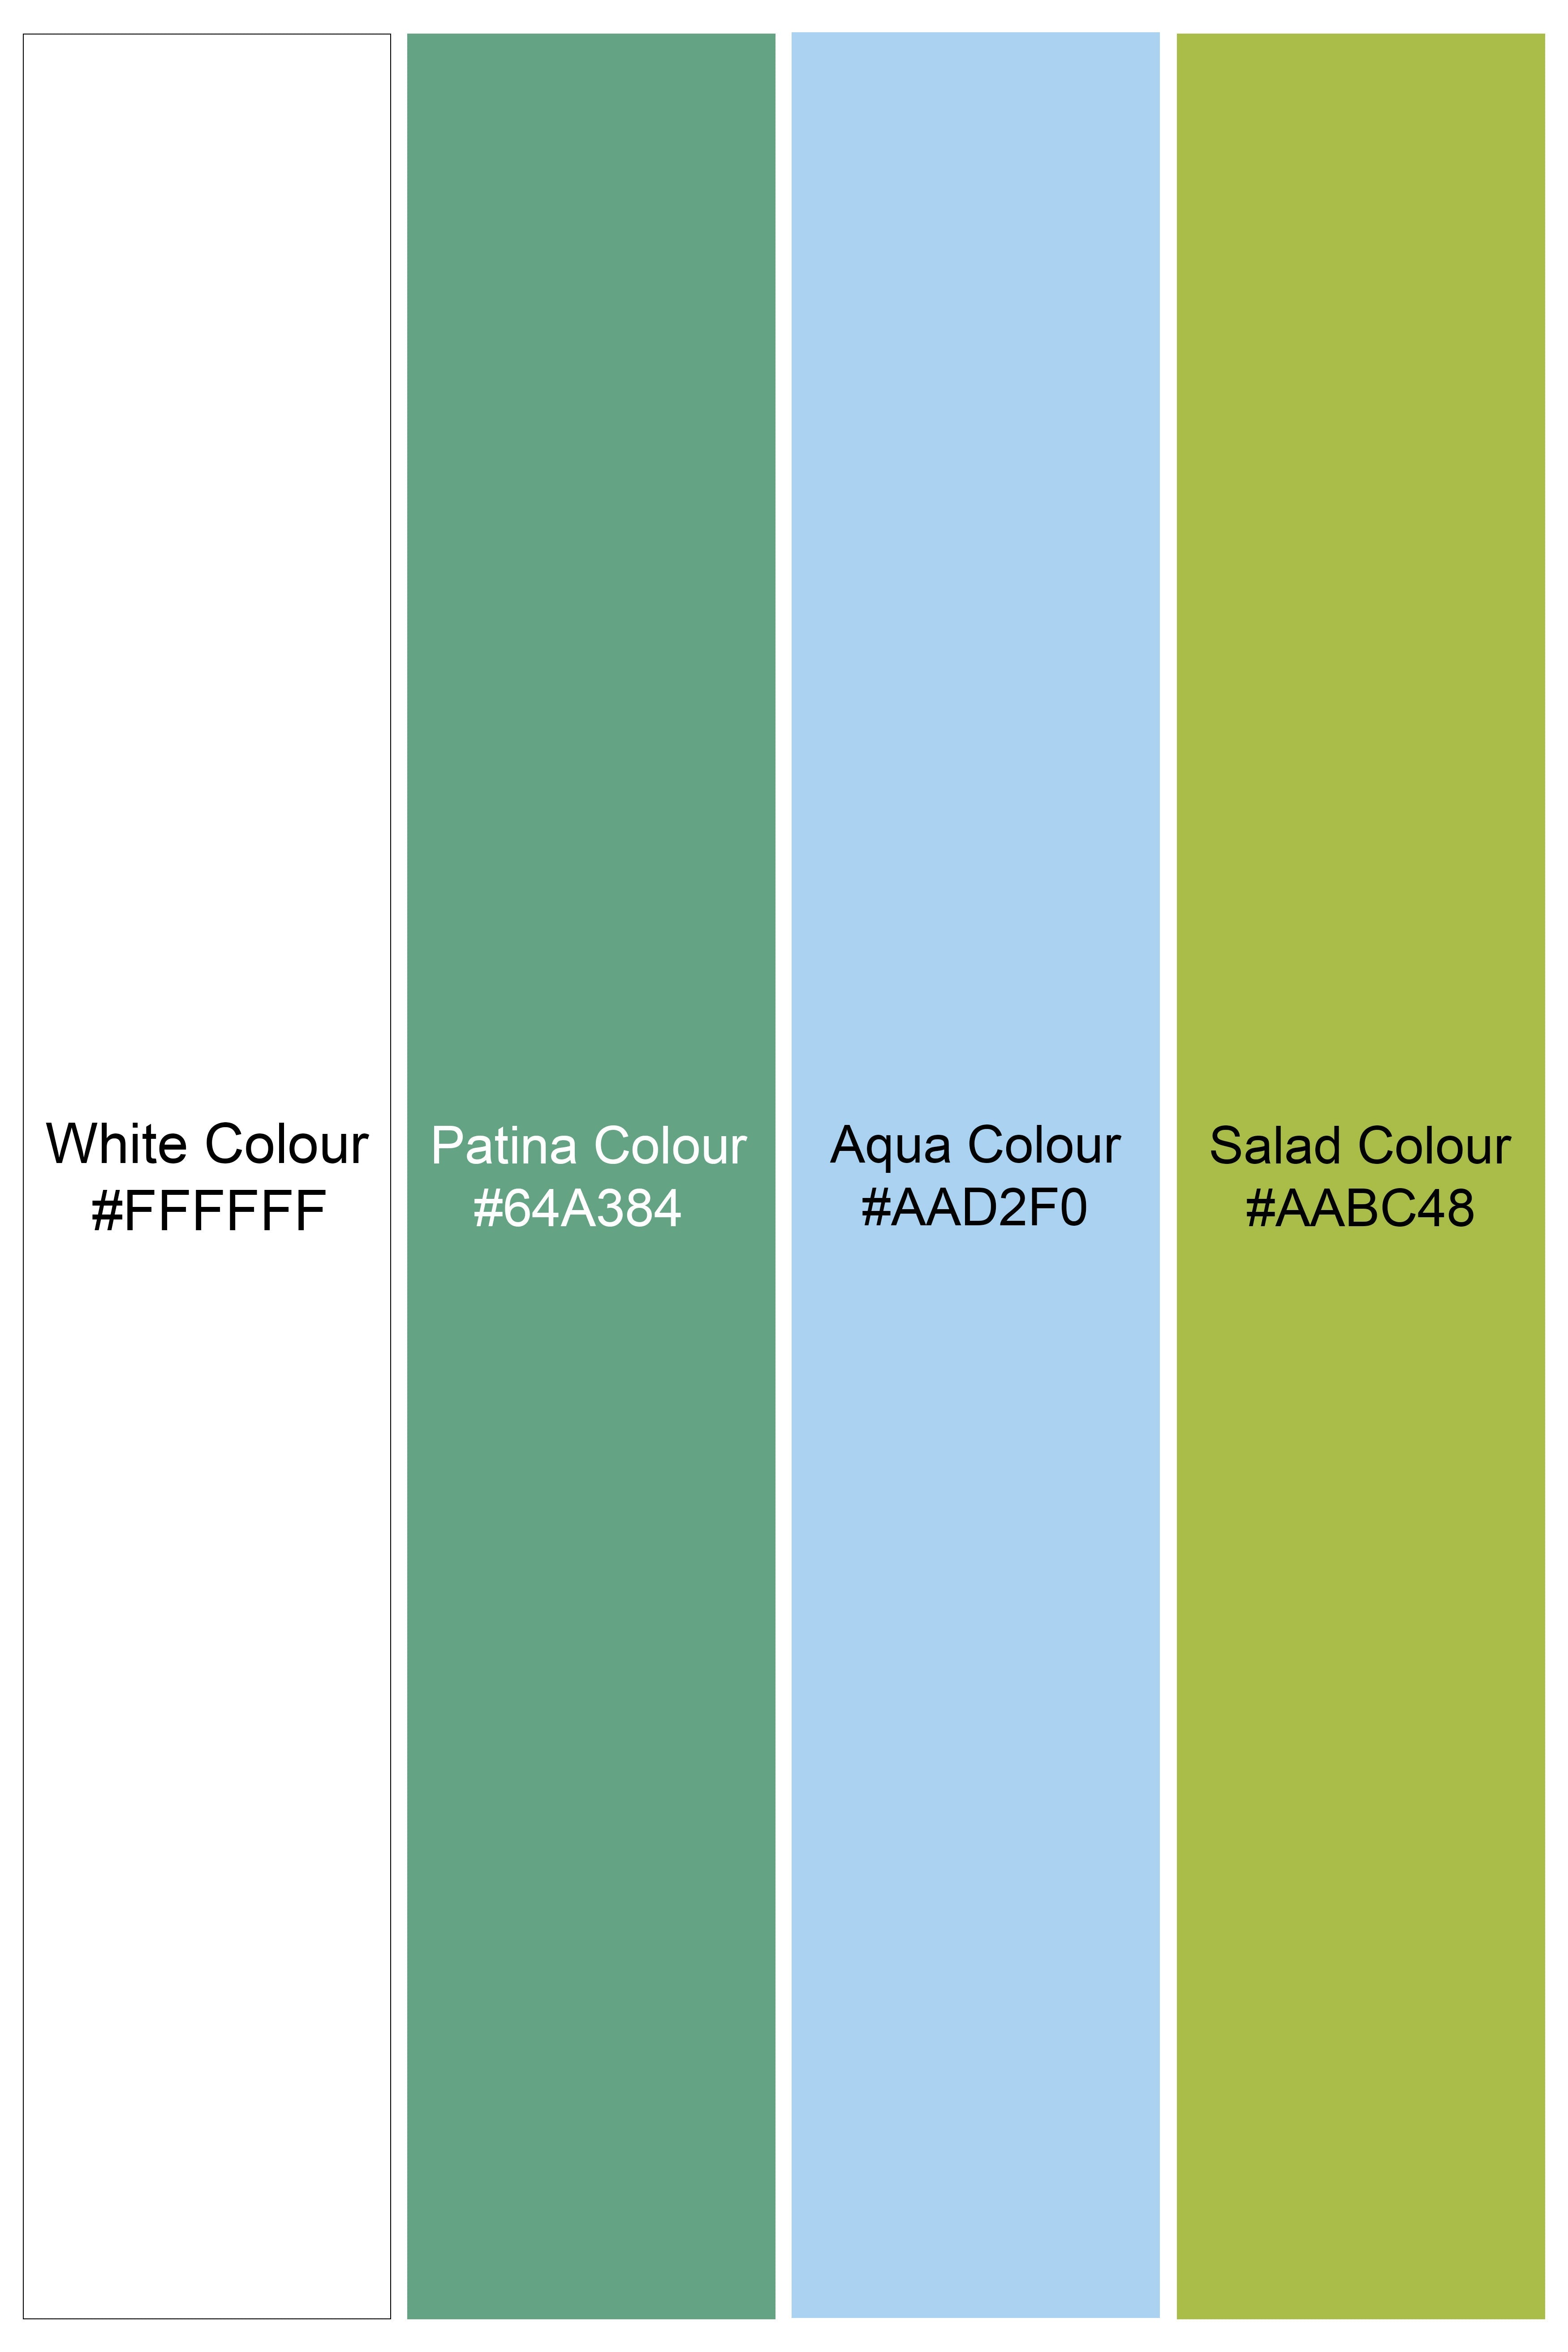 Bright White and Patina Green Plaid Dobby Textured Premium Giza Cotton Shirt